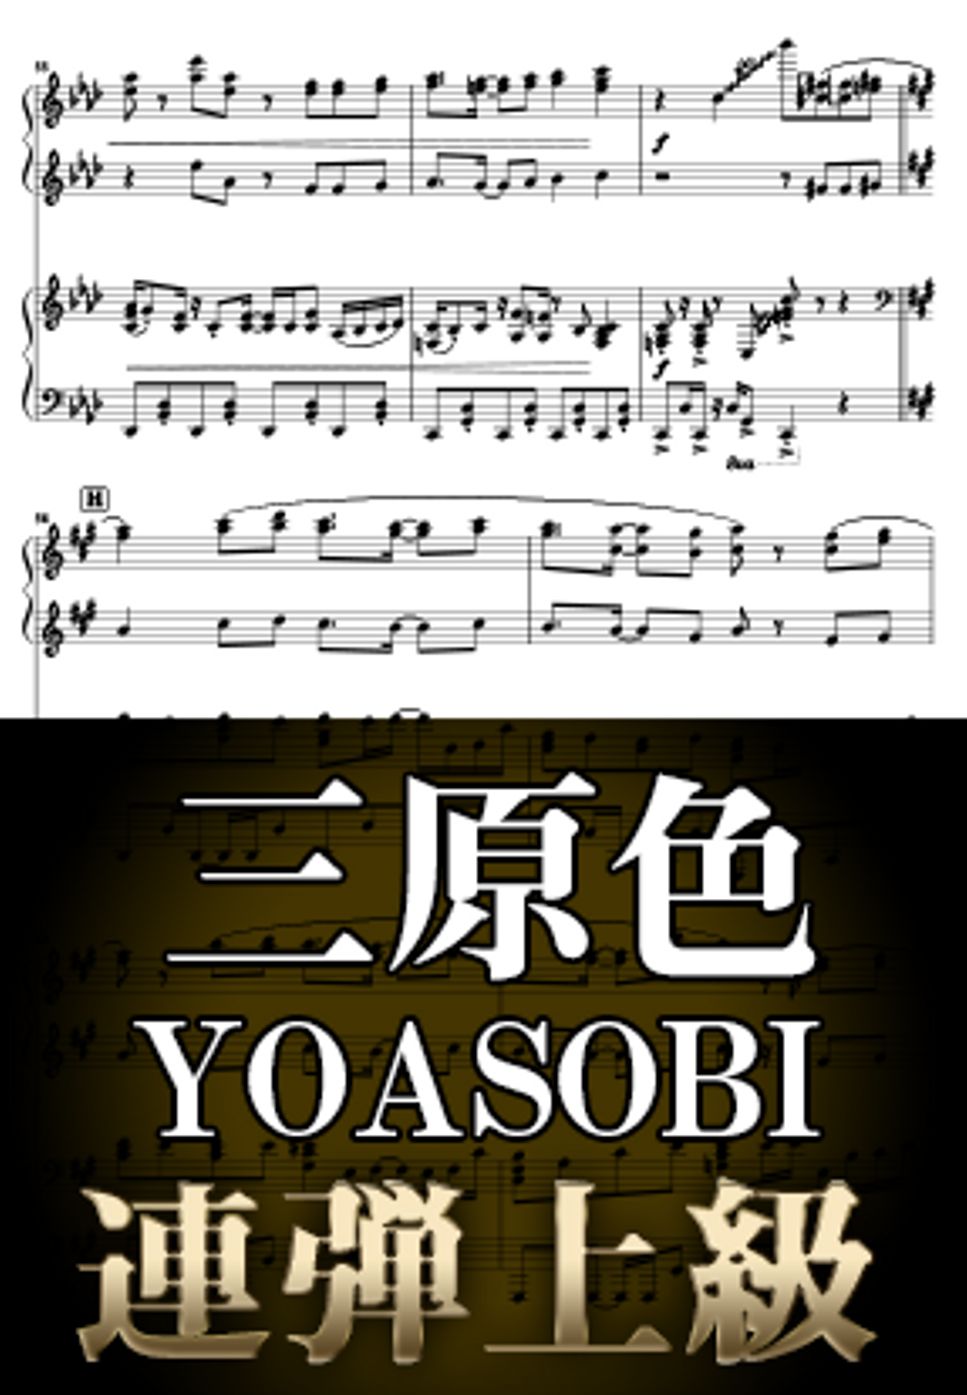 YOASOBI - 三原色 (連弾/「ahamo Special Movie」バージョン) by Suu